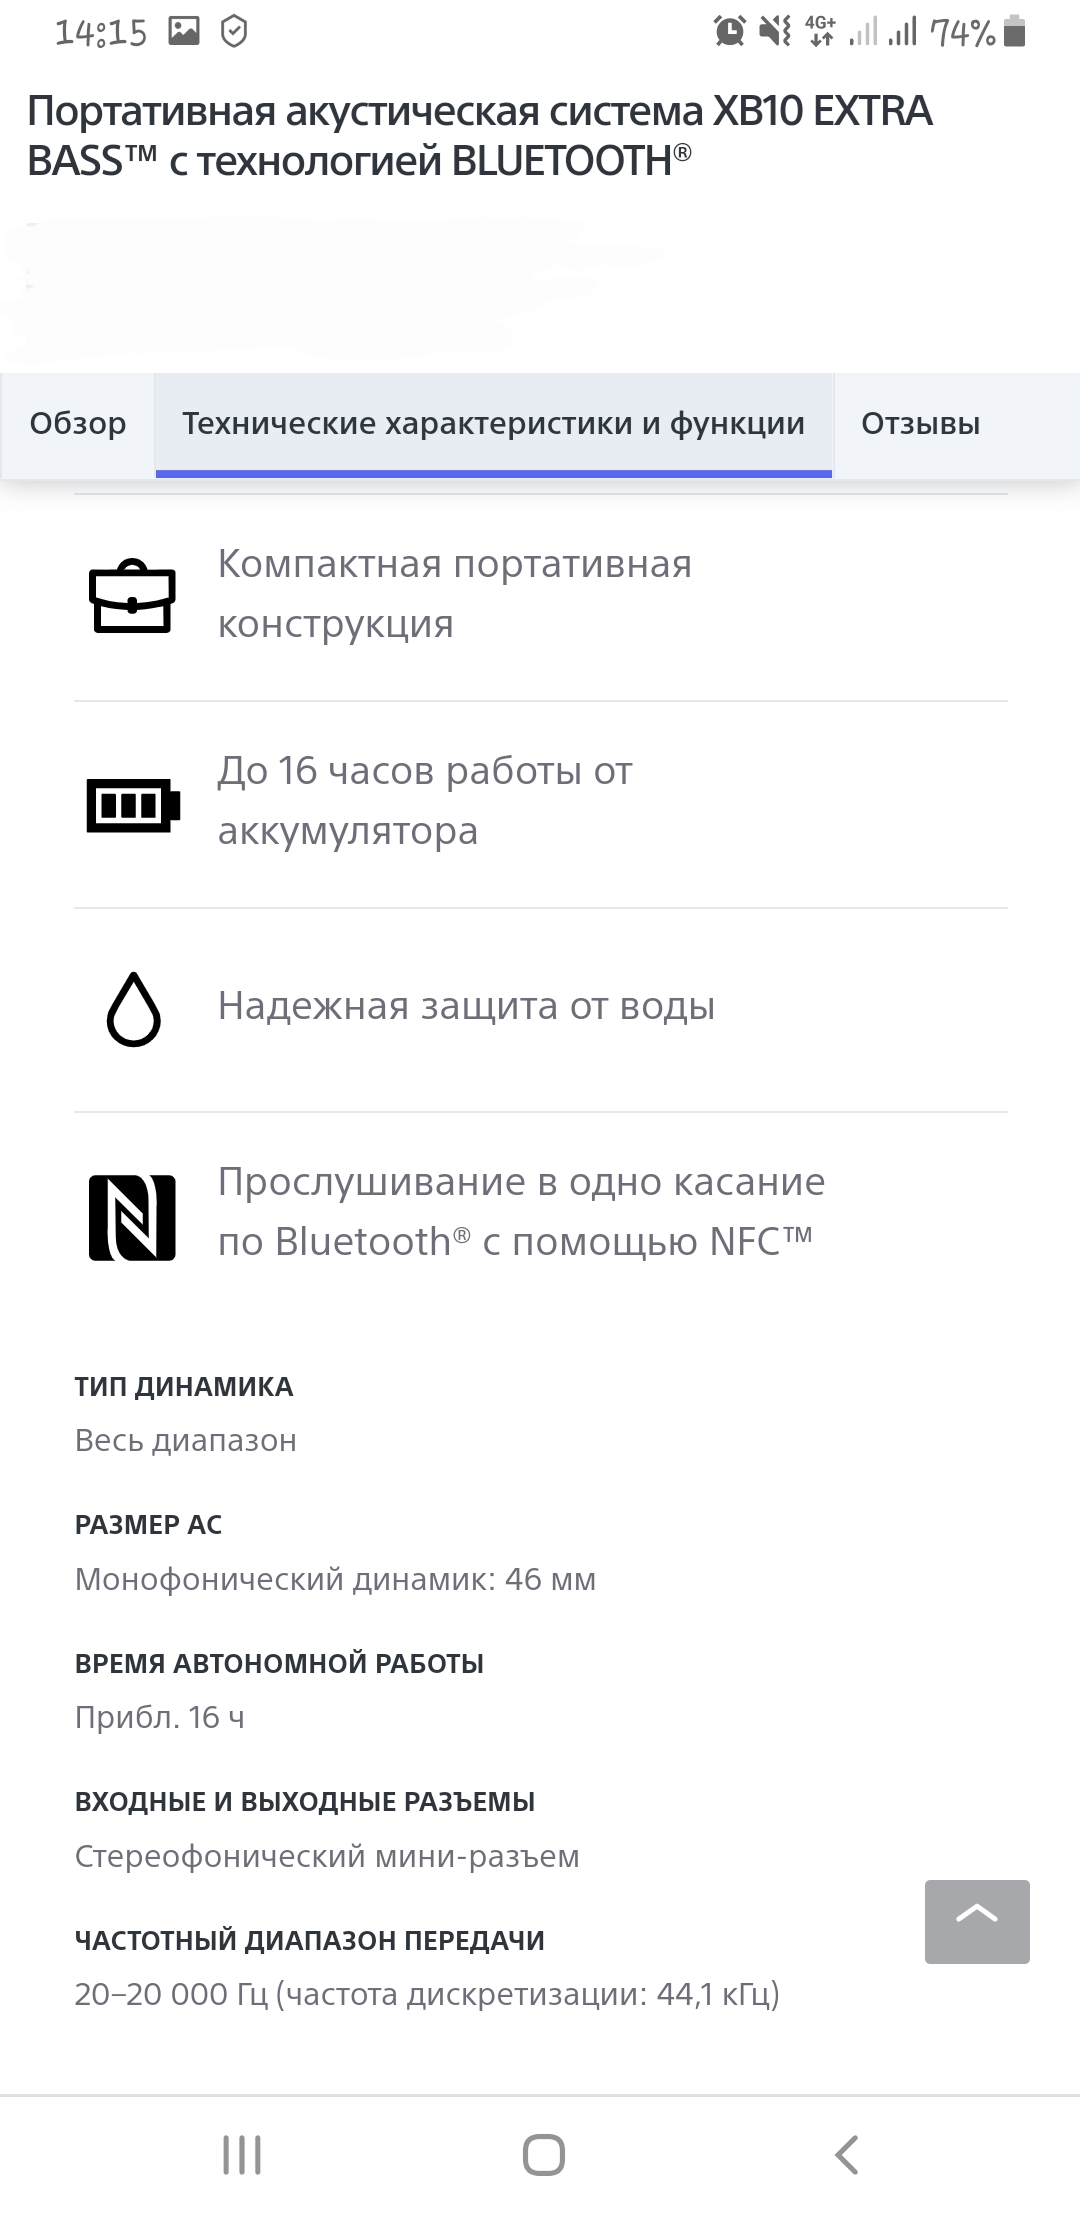 Саяногорск Инфо - screenshot_20210111-141611_chrome.jpg, Скачано: 104